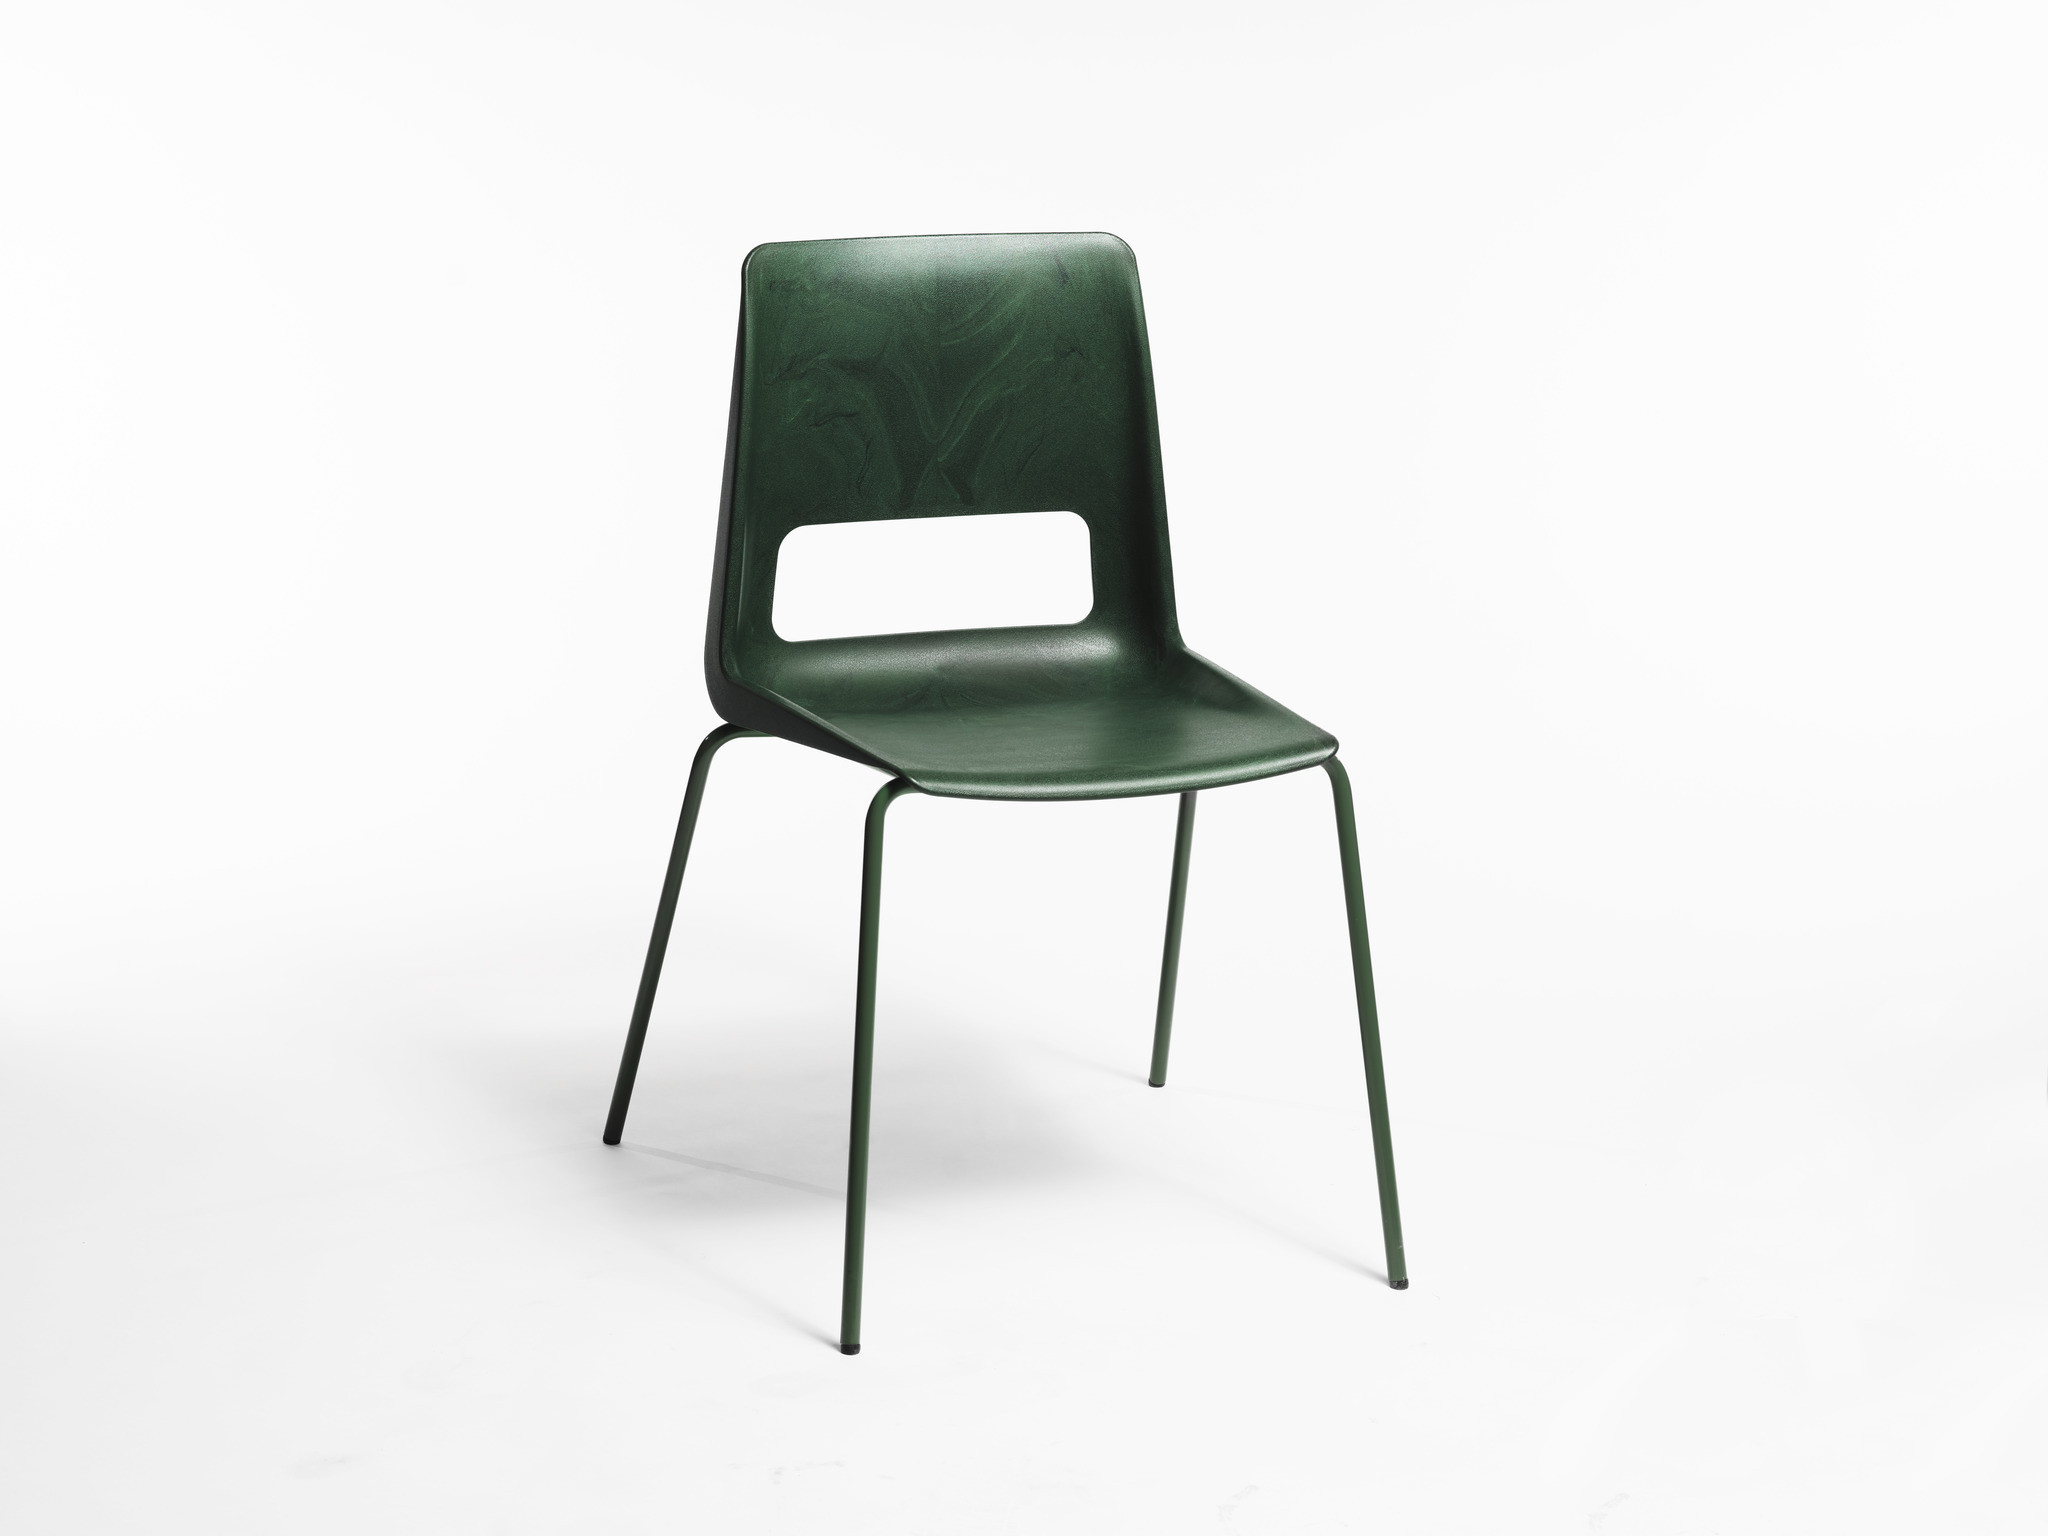 Minimalist Chair Created by Stockholm-Based Designers Snøhetta